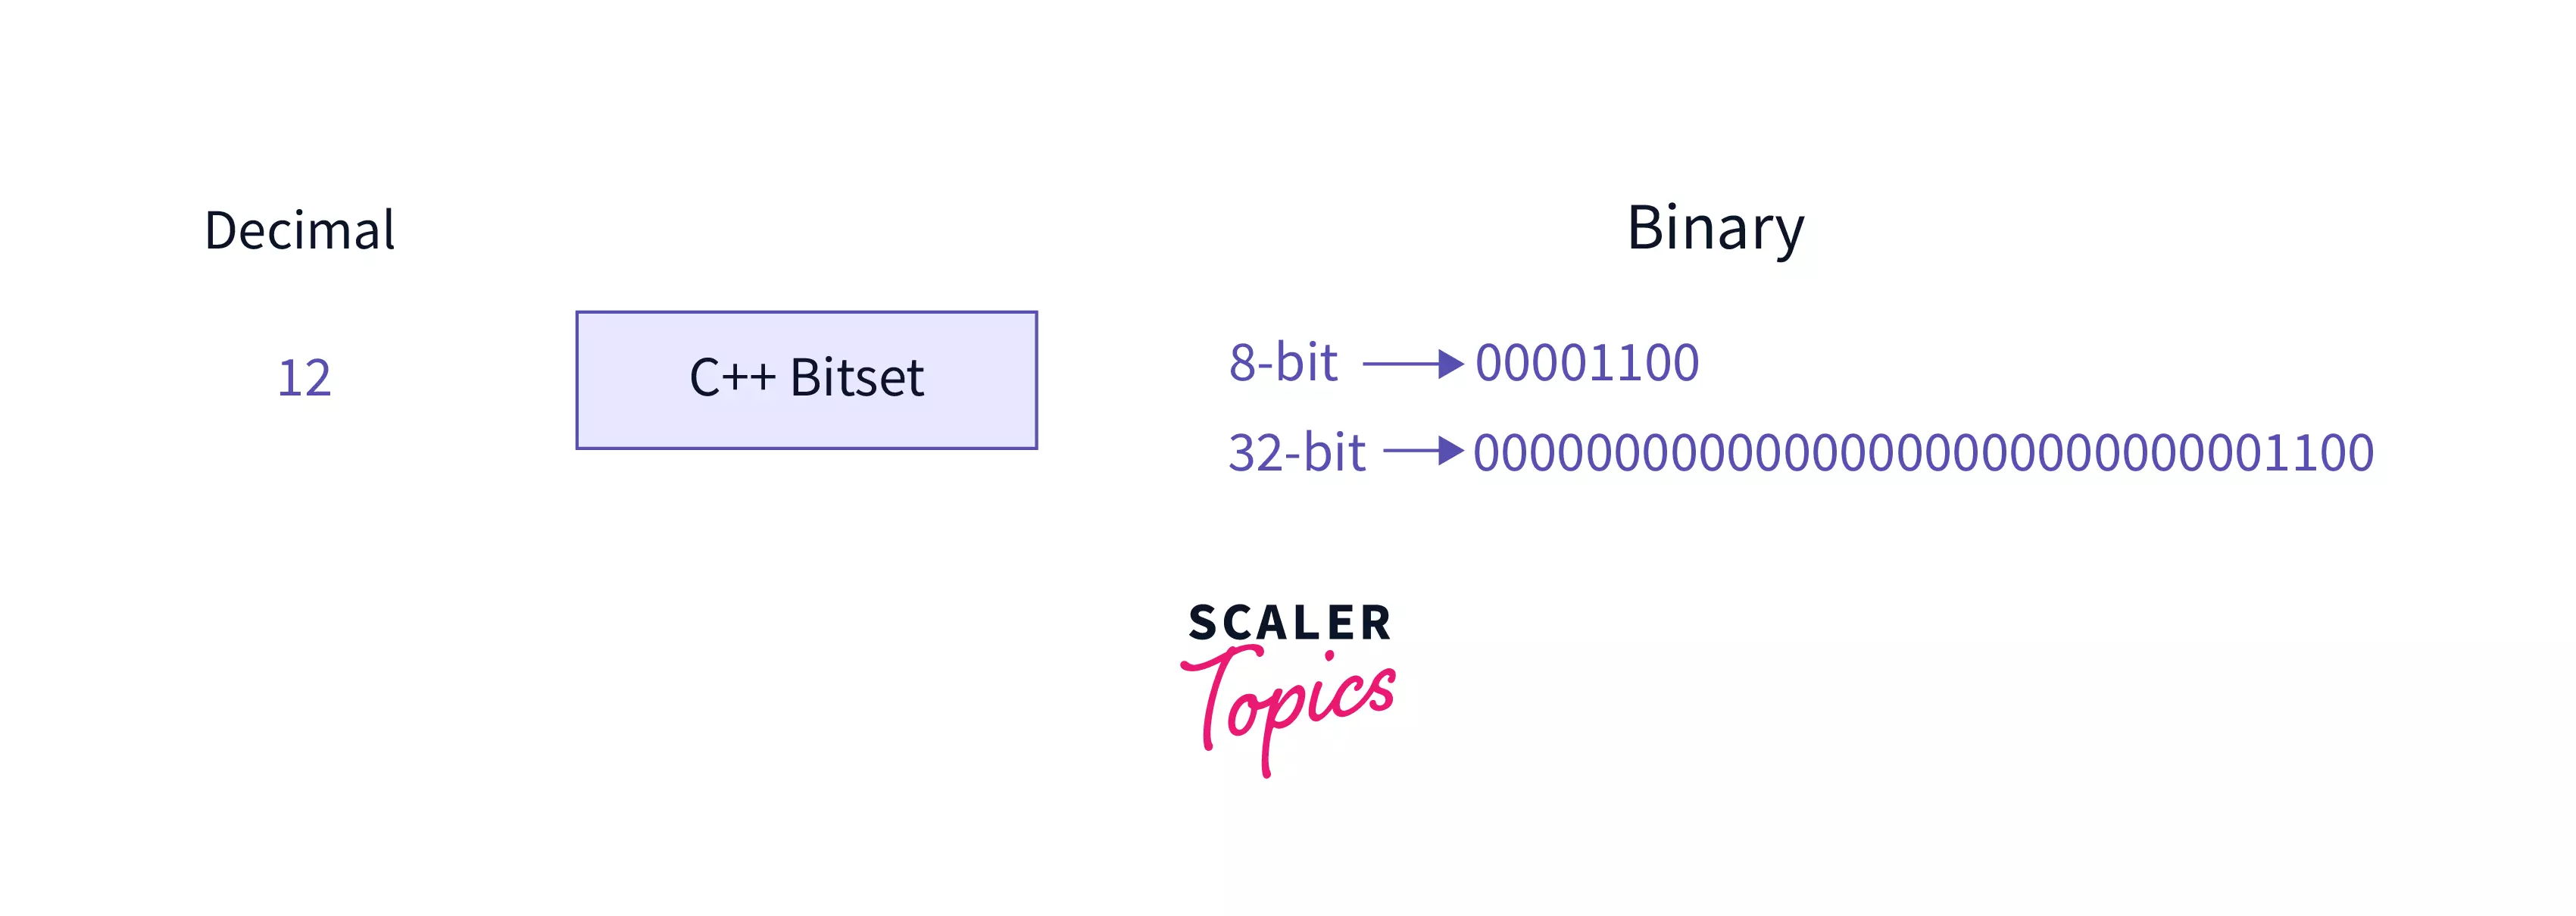 decimal to binary Using Bitset class